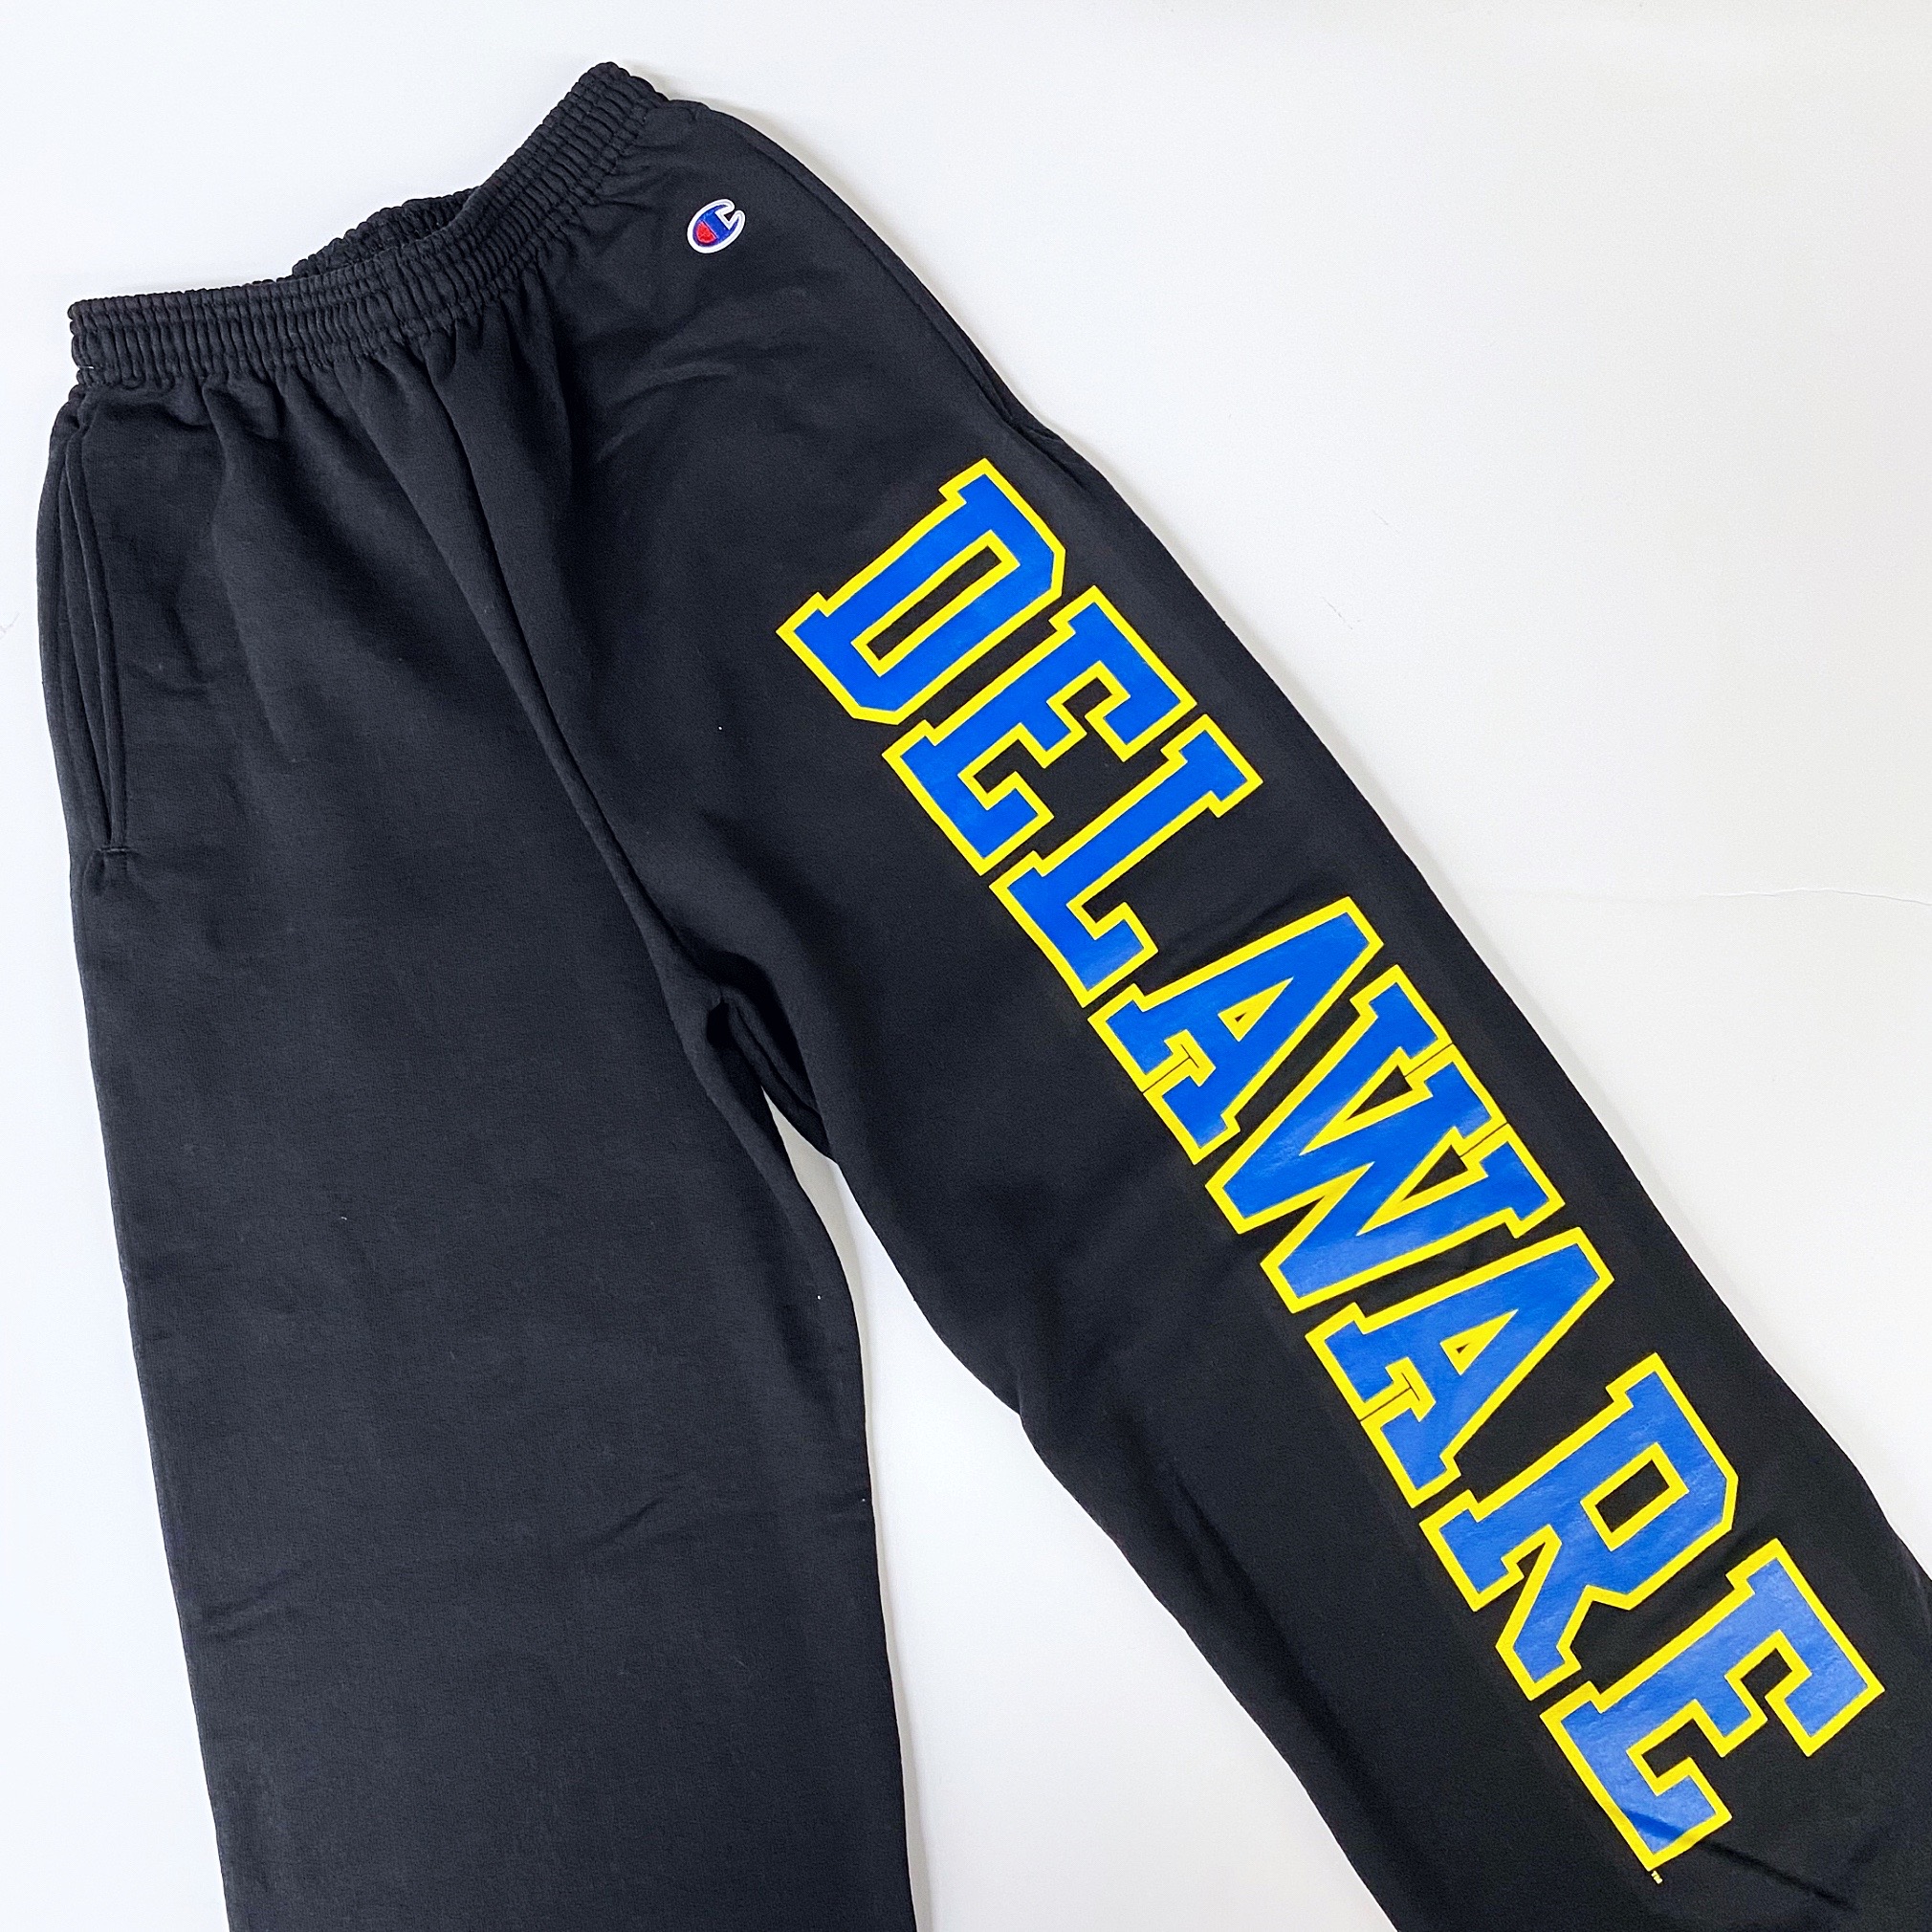 University of Delaware Champion Big Delaware Sweatpants - Black